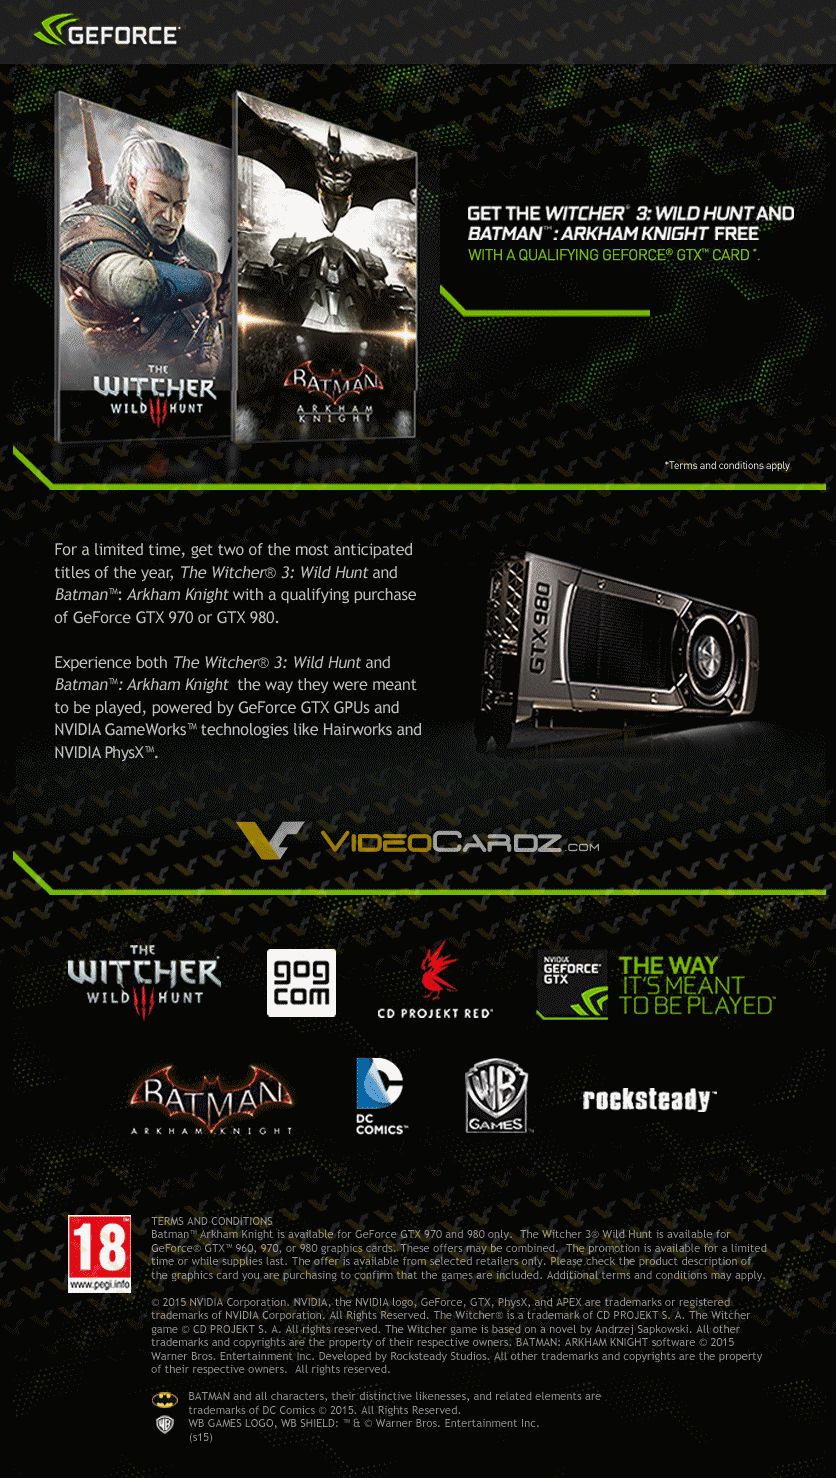 Witcher3 and Batman AK promotion videocardz_com